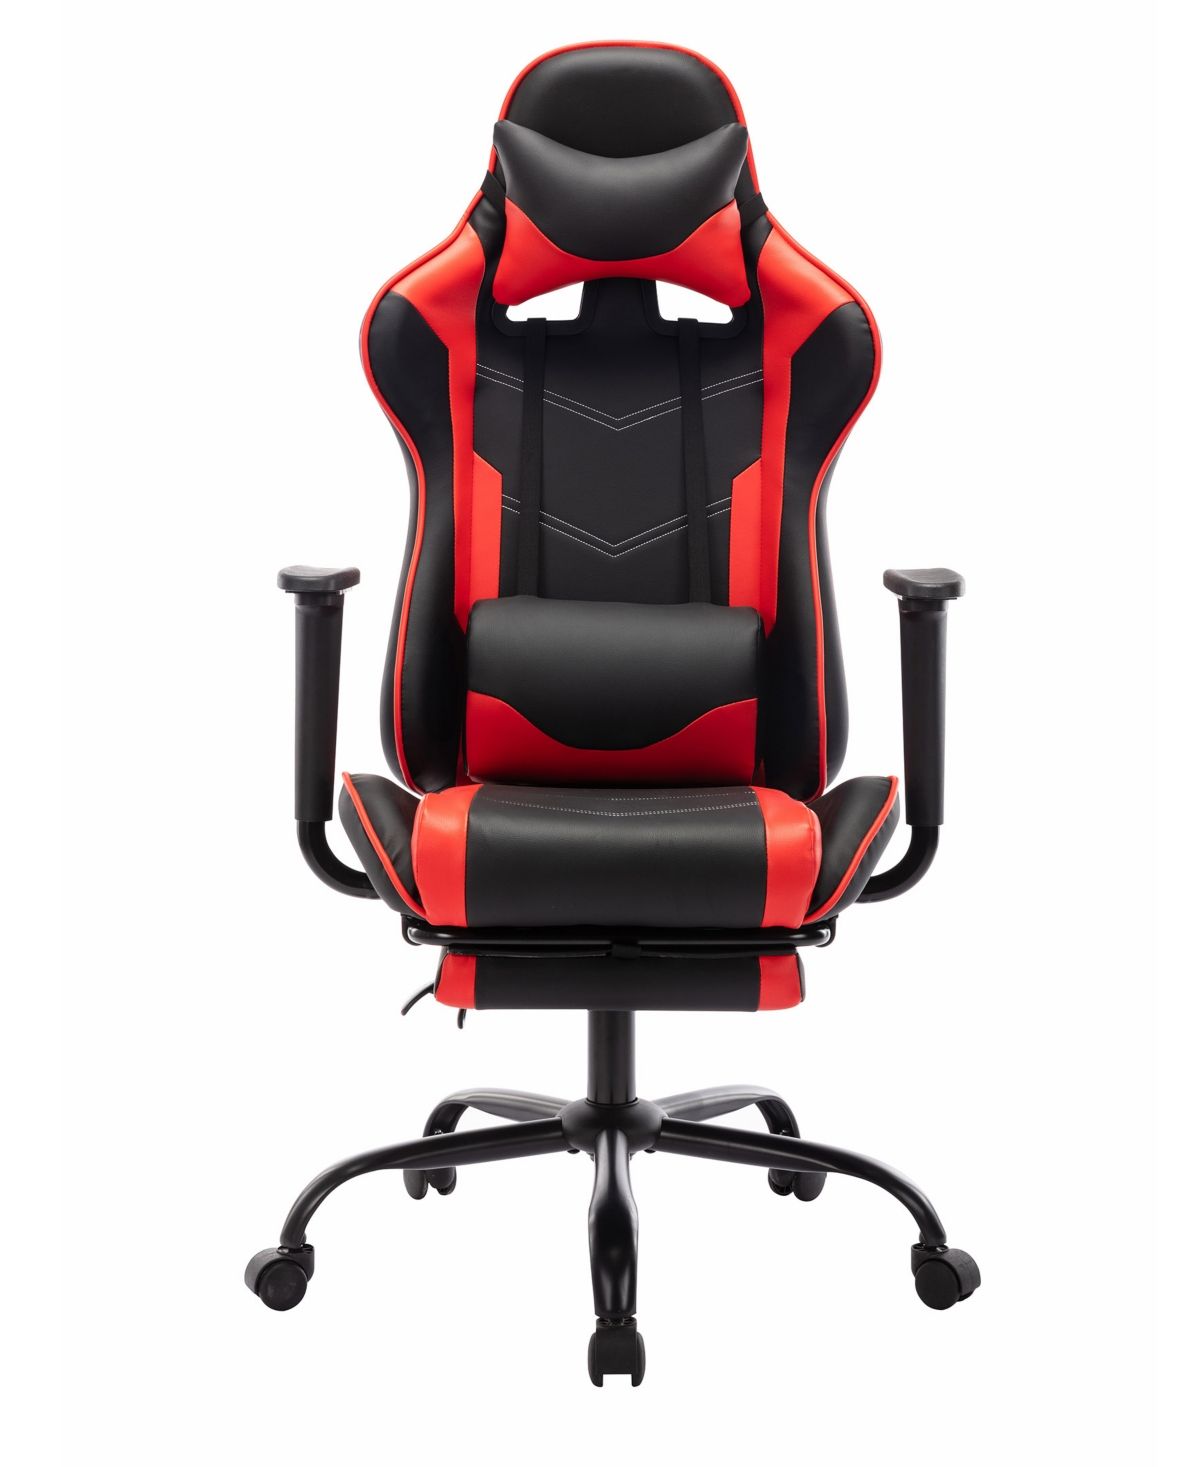 Nidella Adjustable Gaming Chair | Macys (US)